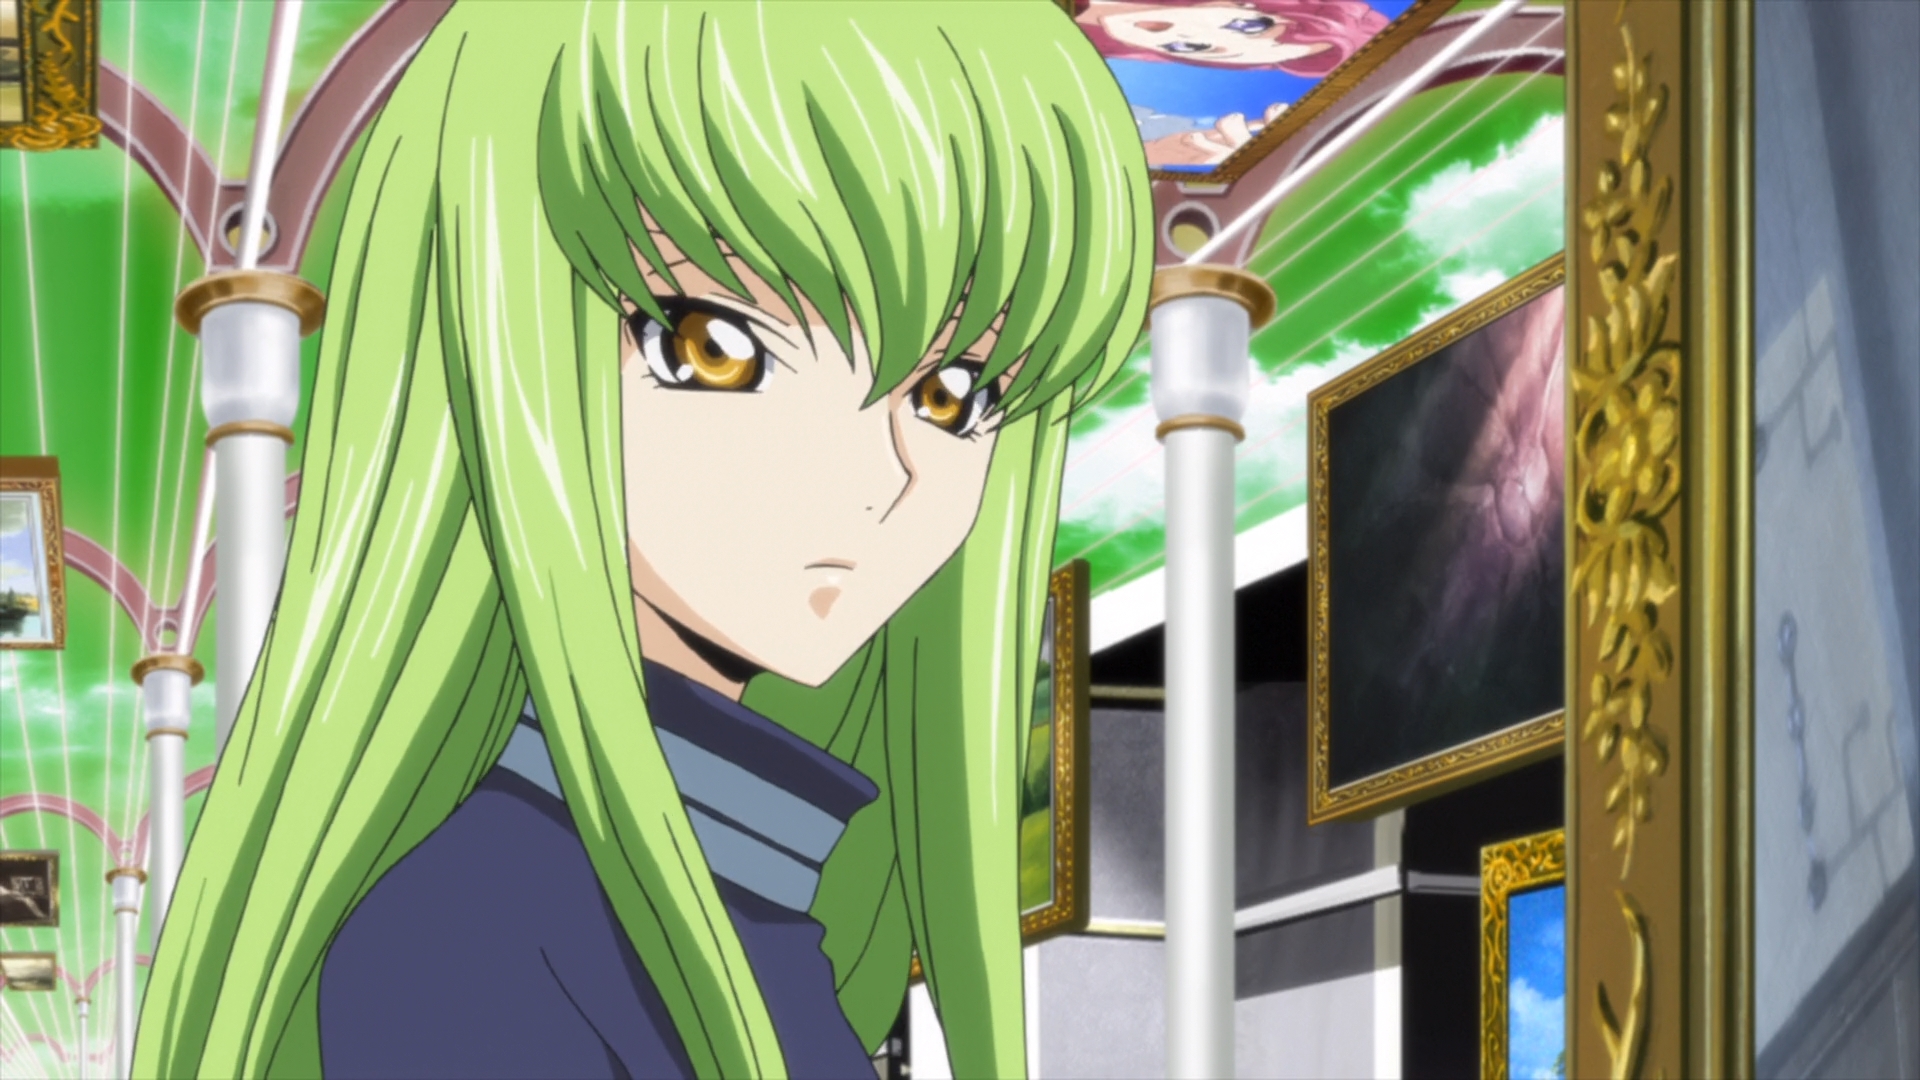 Anime 1920x1080 anime anime girls Code Geass C.C. (Code Geass) long hair green hair anime screenshot artwork digital art